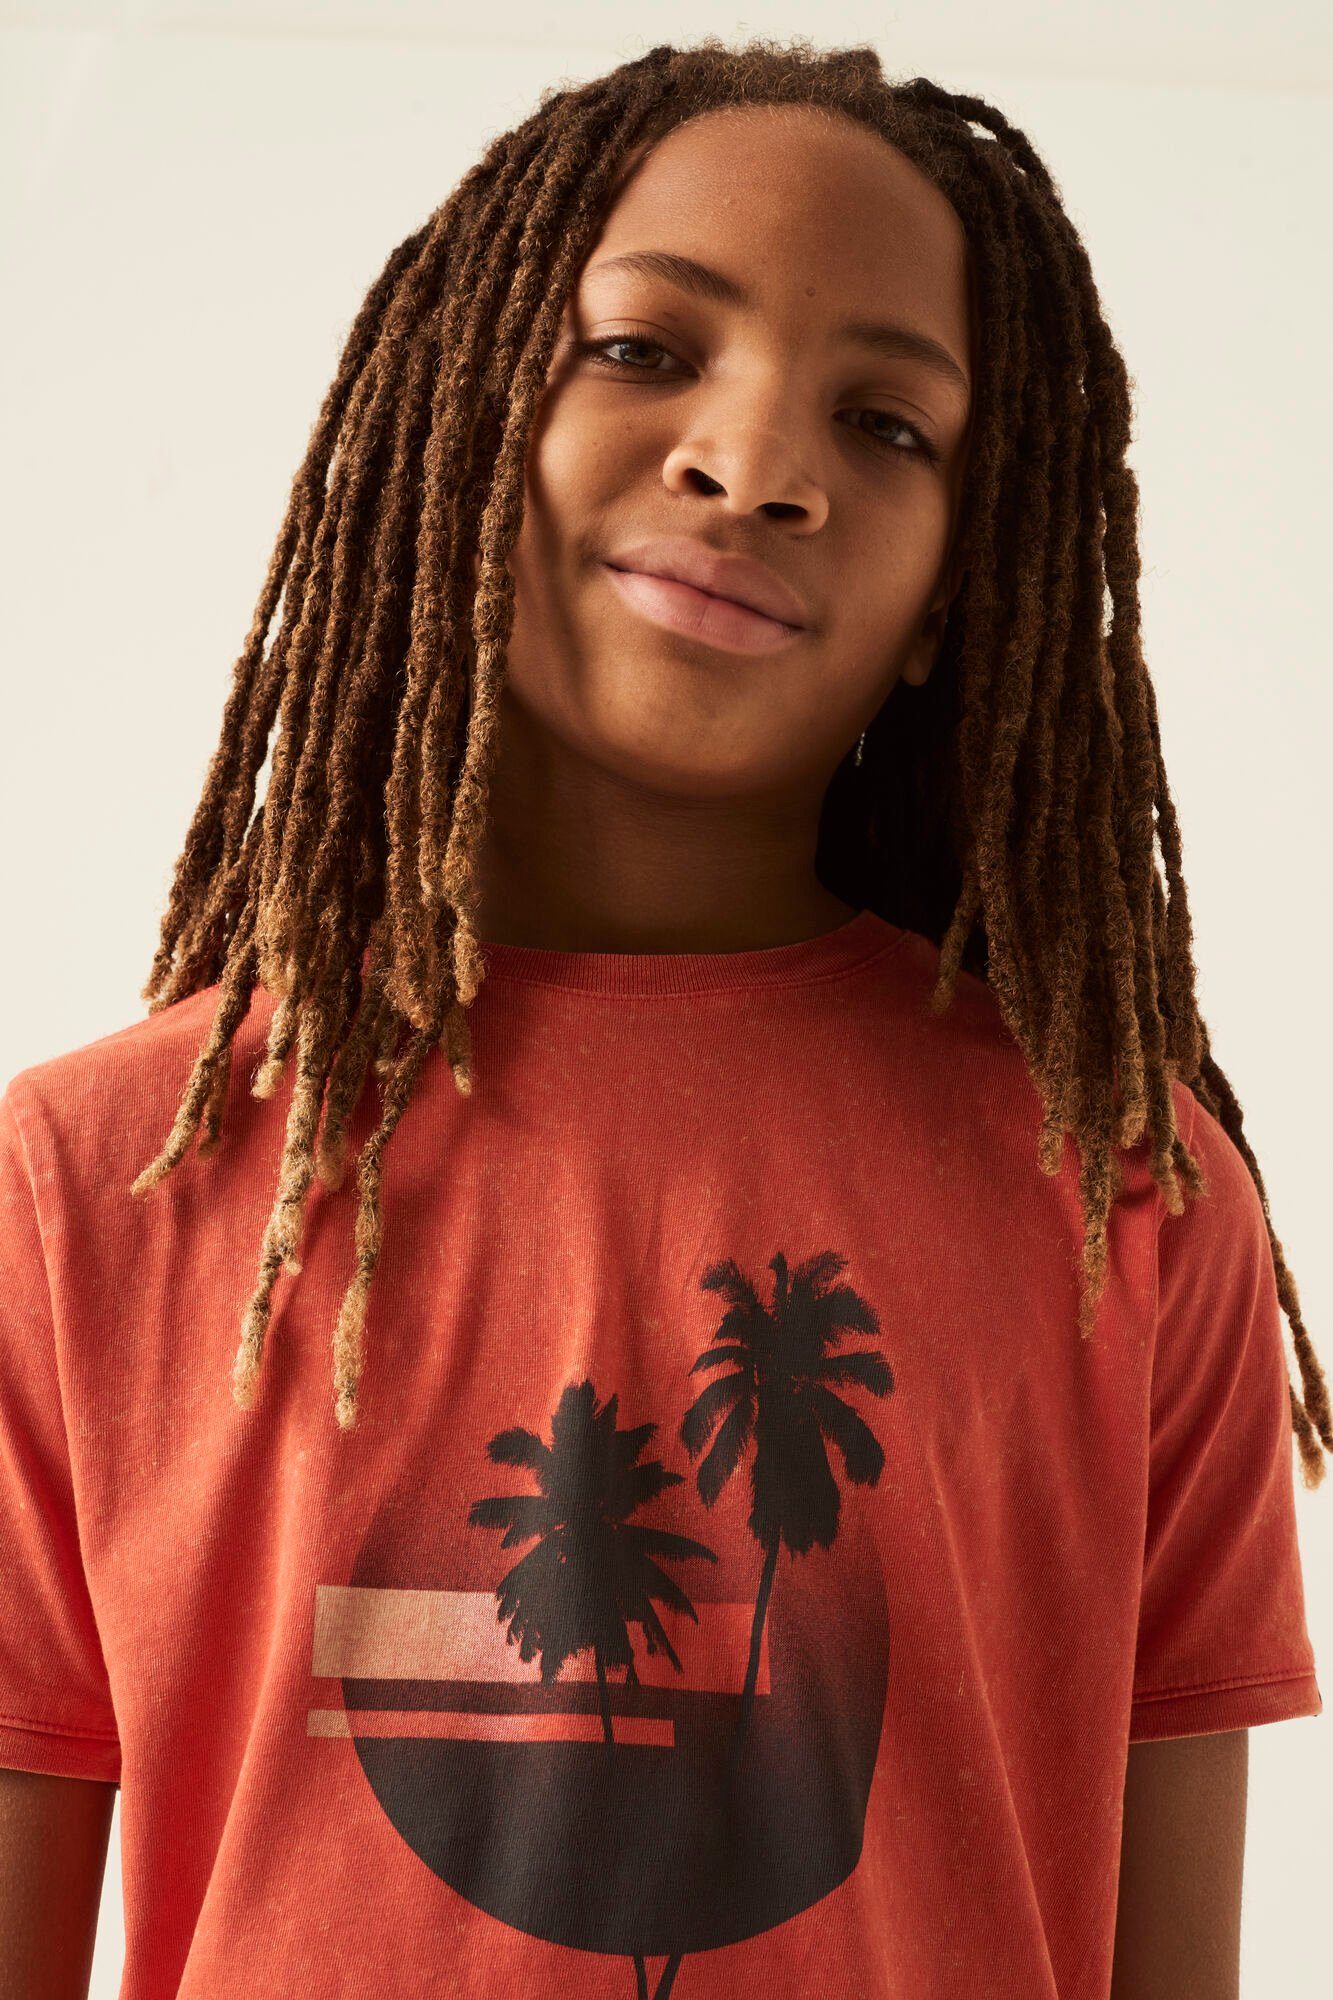 Garcia T-Shirt mit Palmenprint